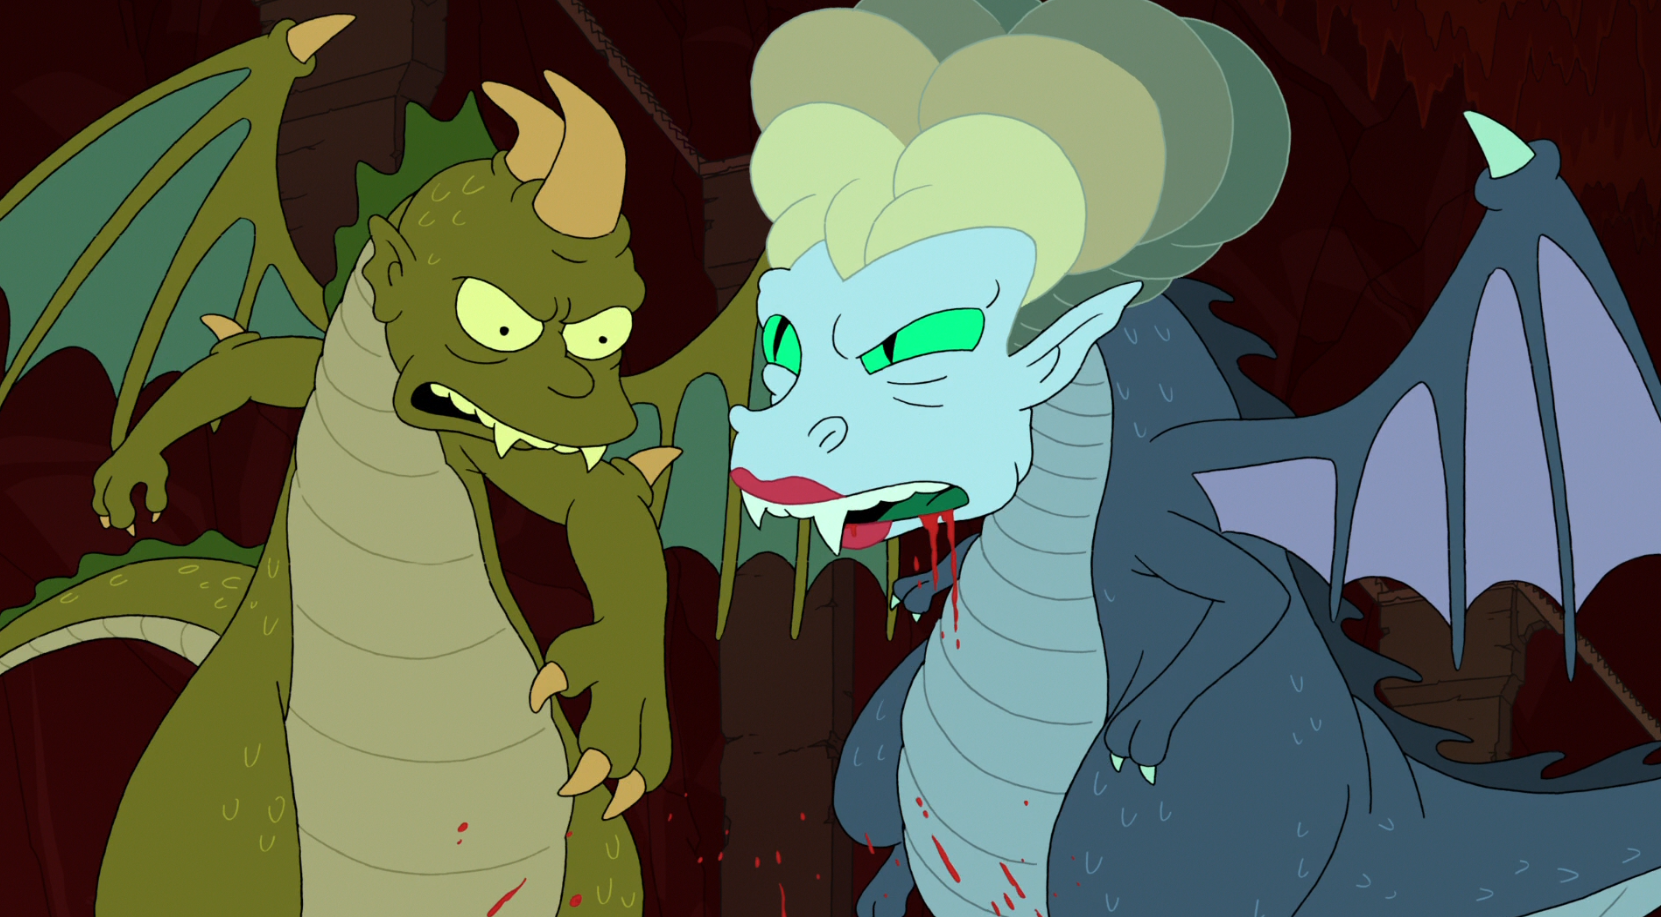 Momon in her dragon form (right) battling Fry.